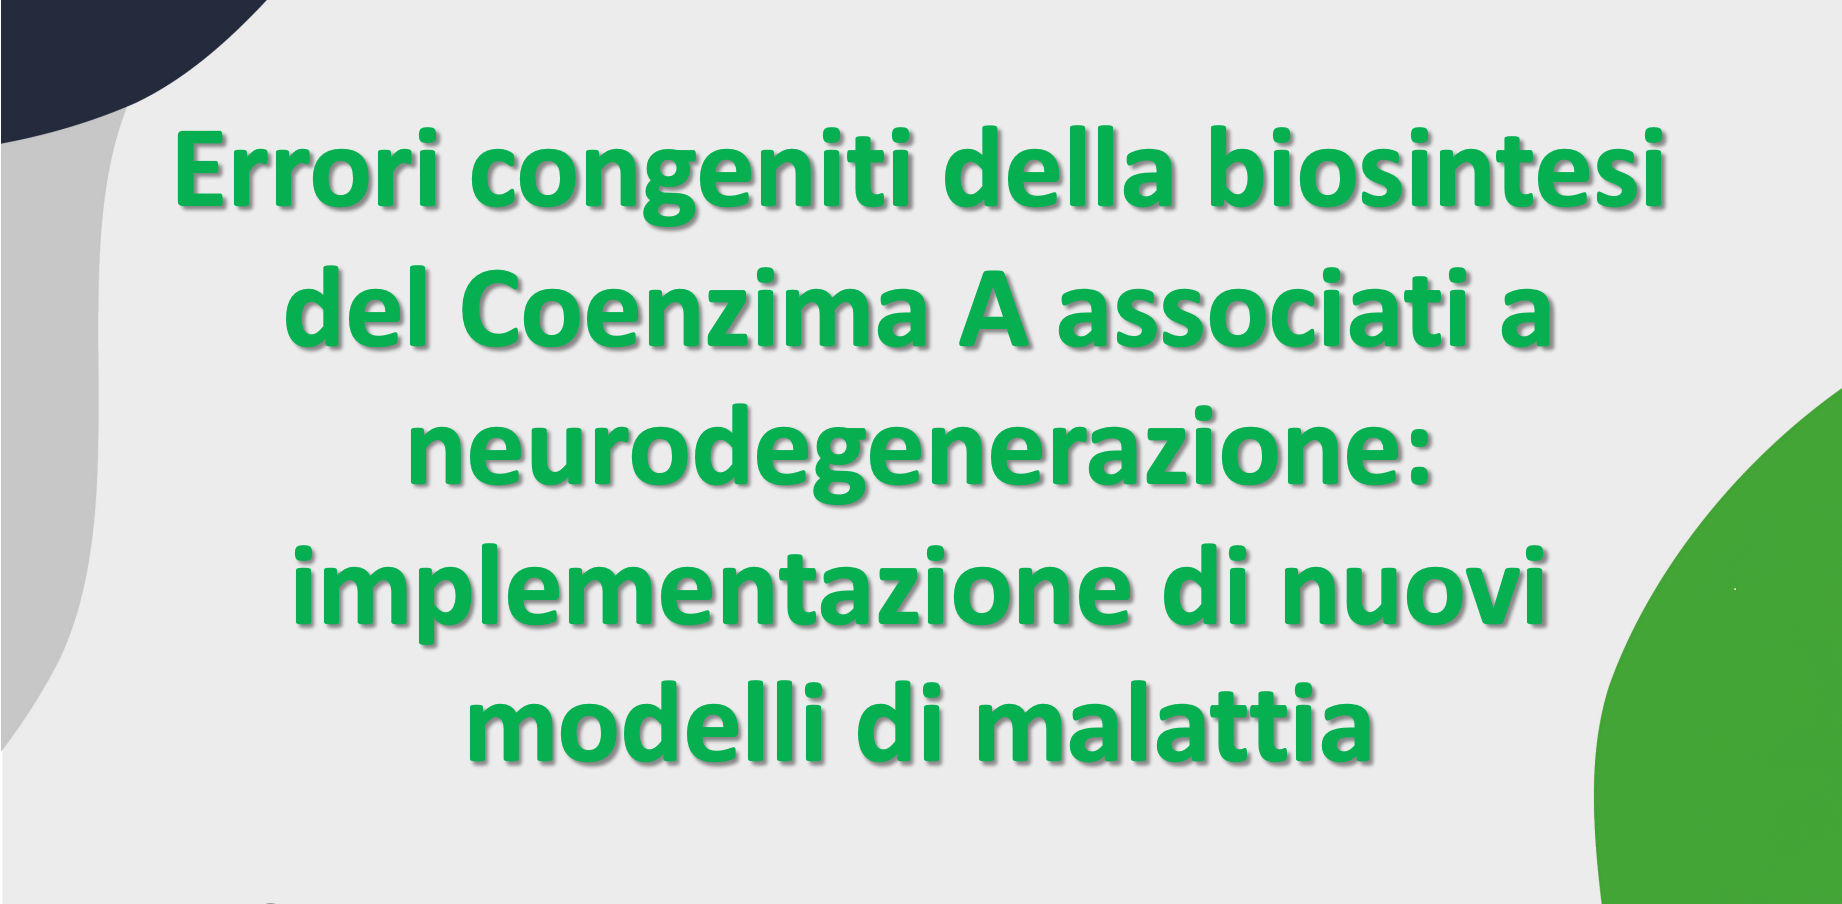 Errori congeniti della biosintesi del Coenzima A associati a neurodegenerazione: implementazione di nuovi modelli di malattia